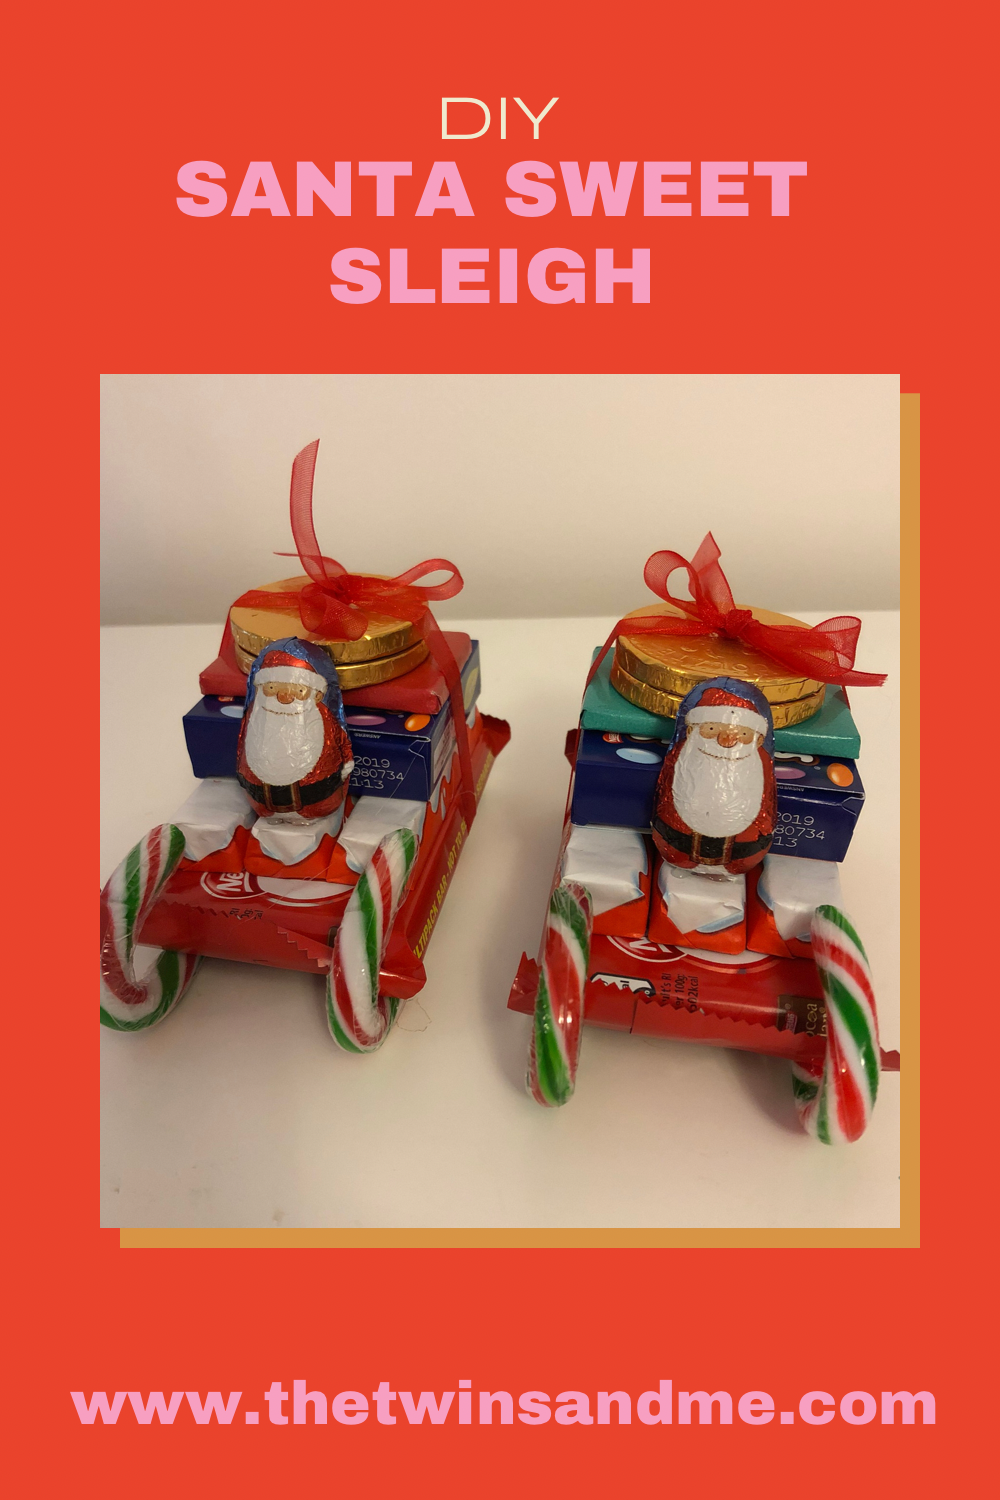 Santa Sweet sleigh